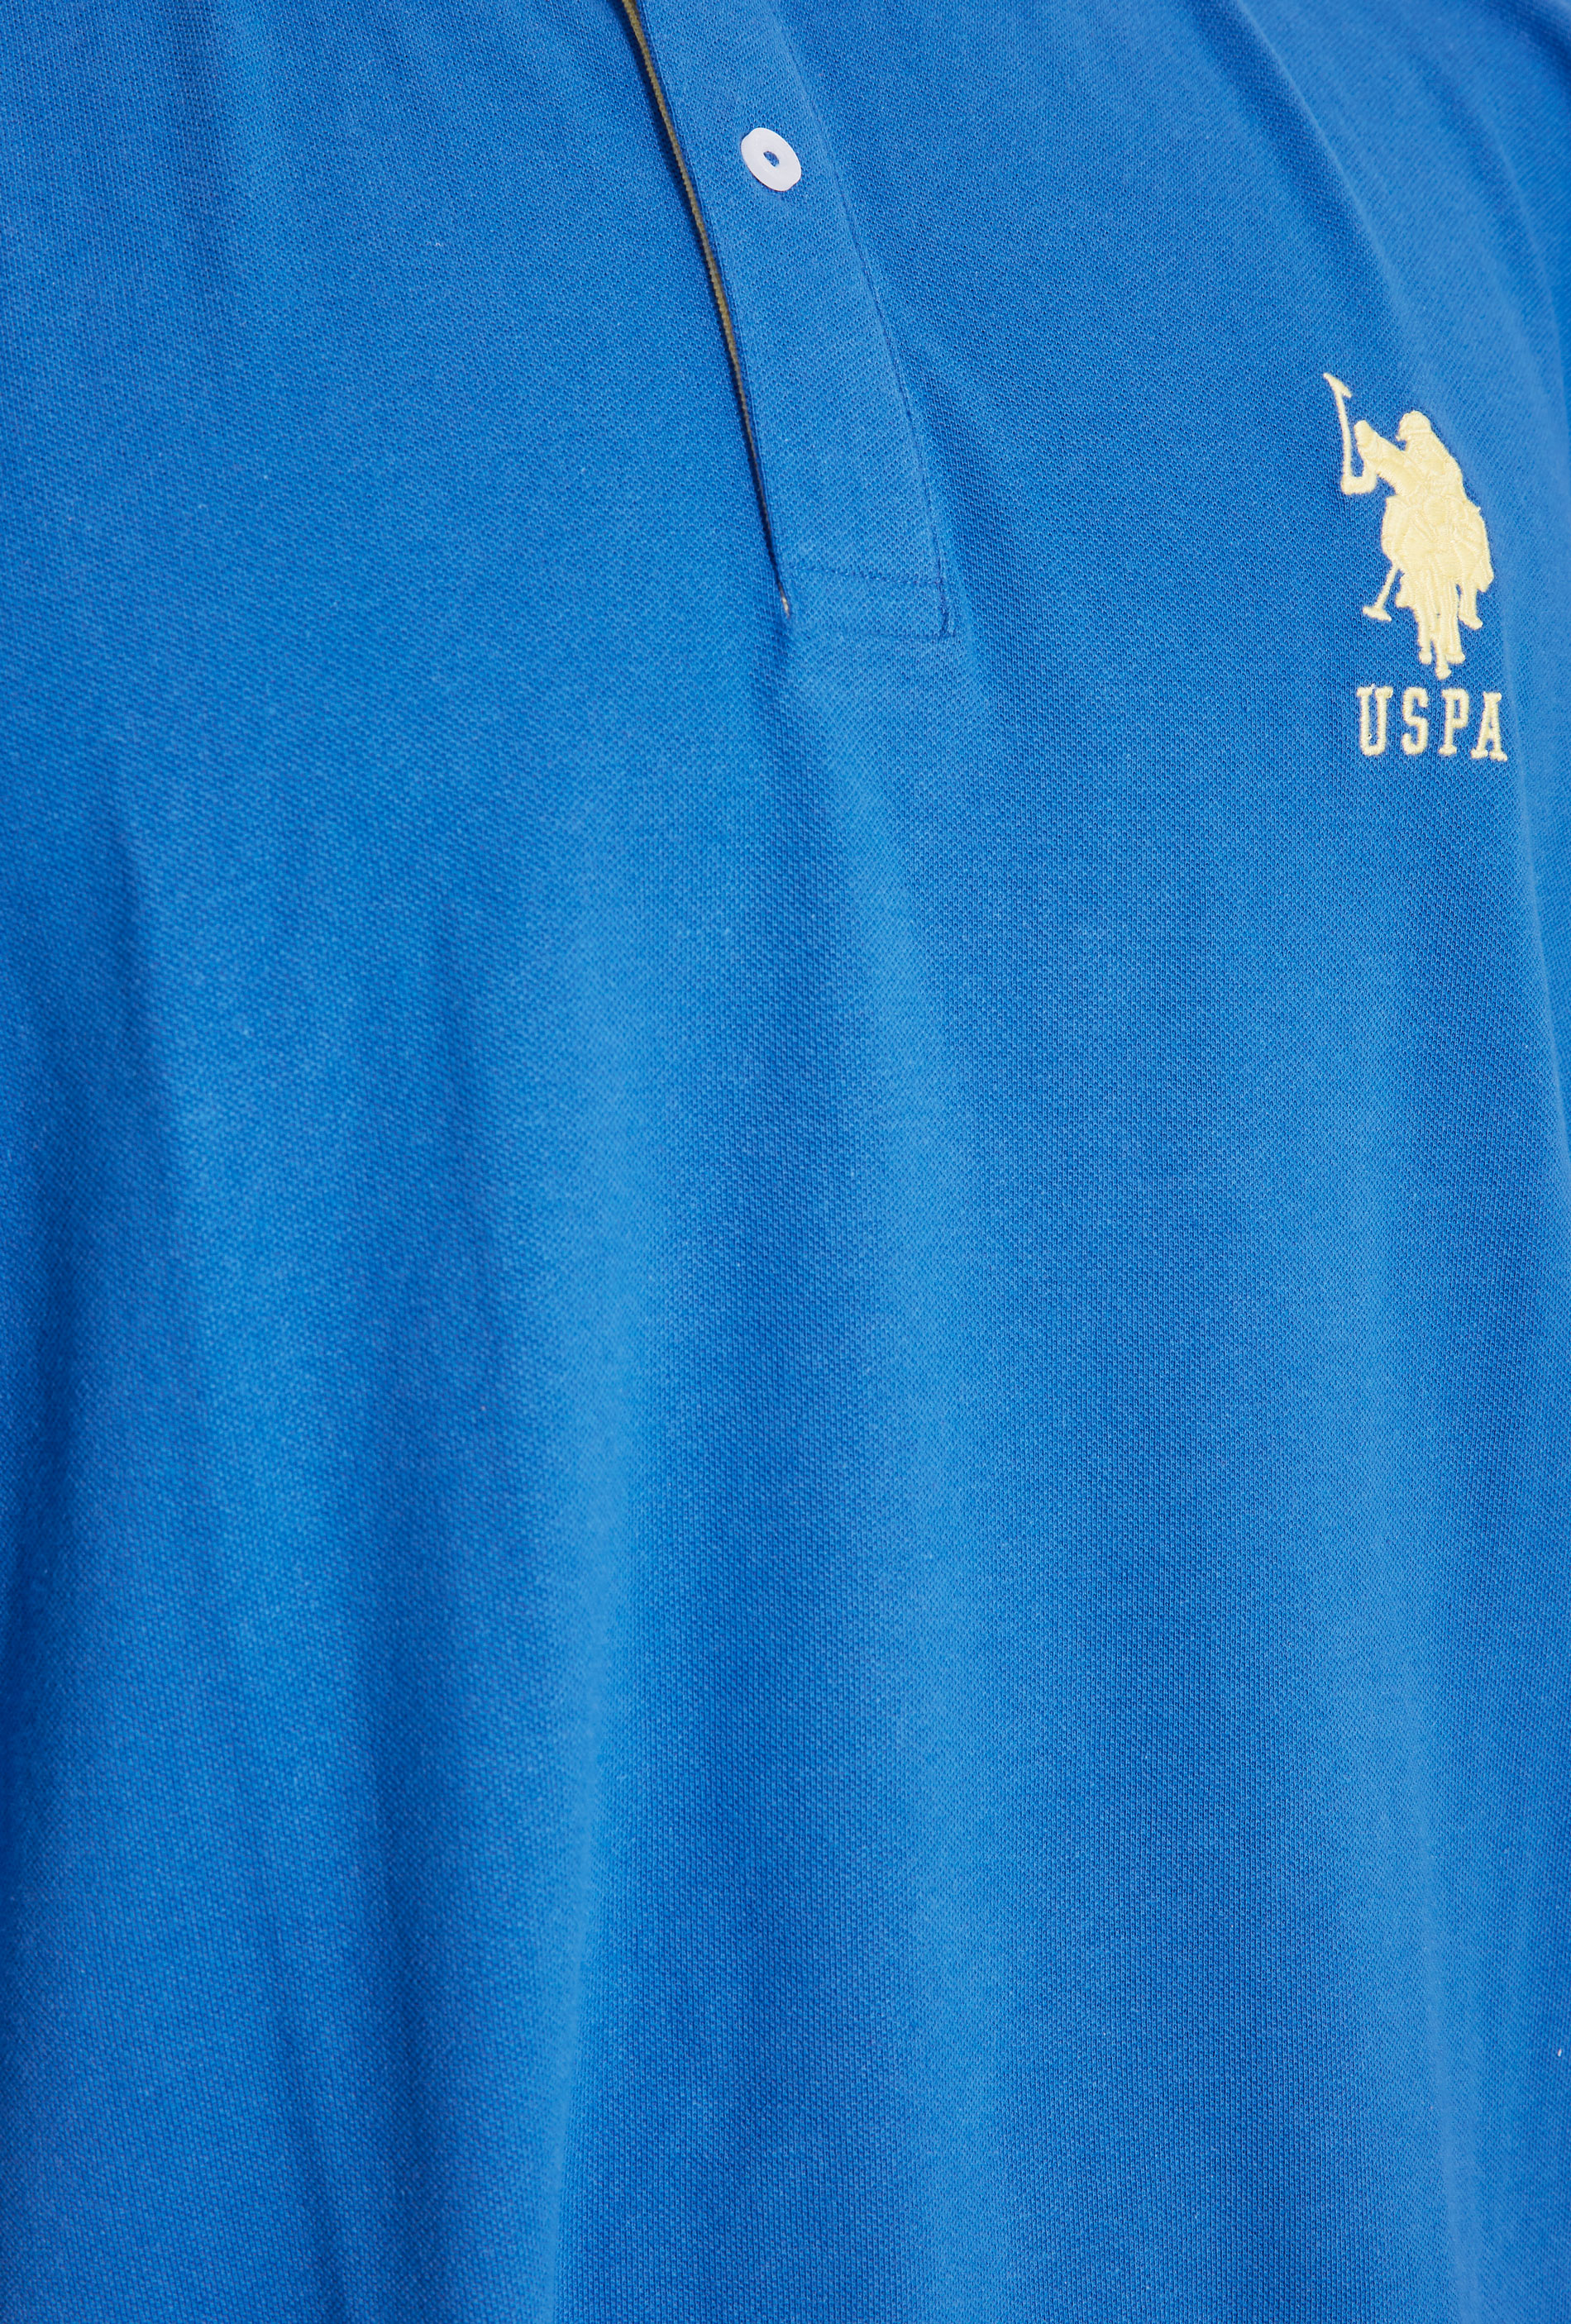 U.S. POLO ASSN. Blue Player 3 Polo Shirt | BadRhino